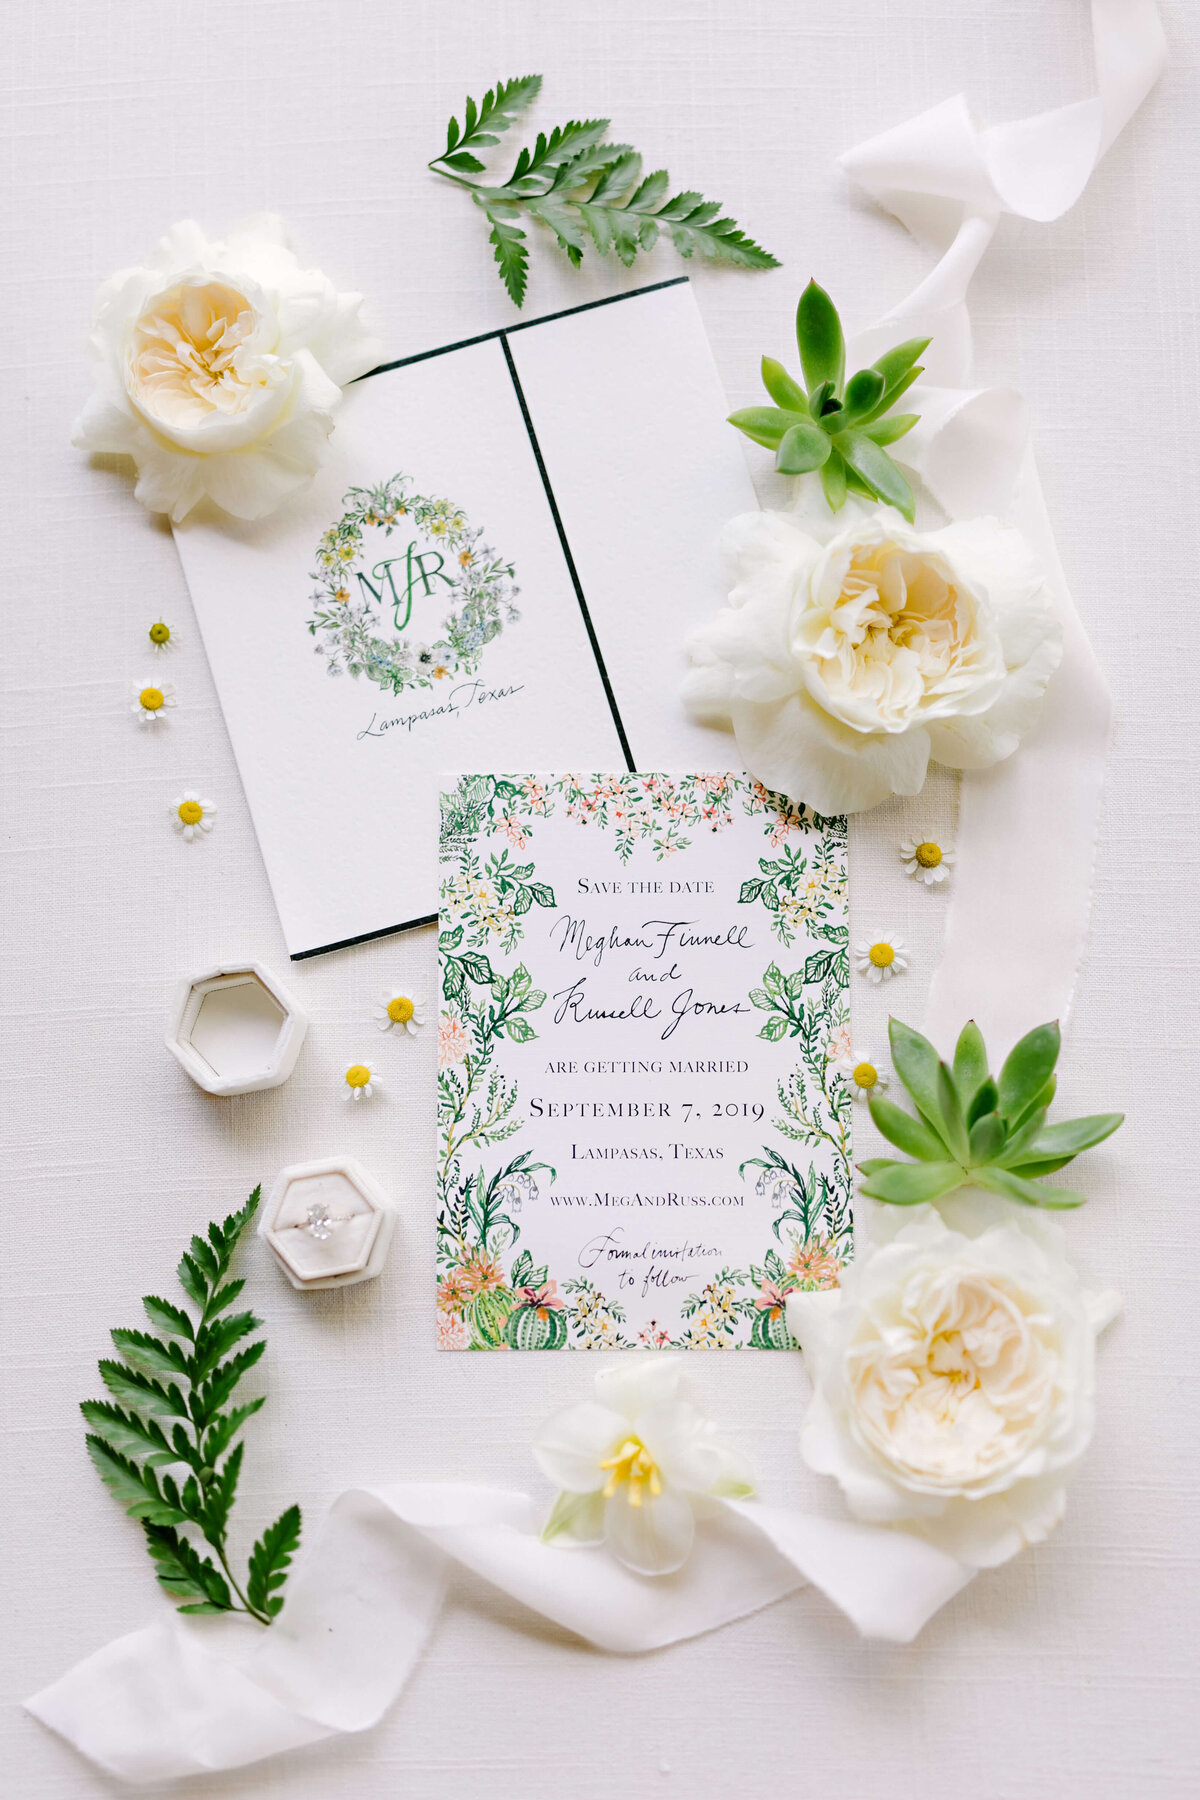 Watercolor wedding invitations for an Austin wedding